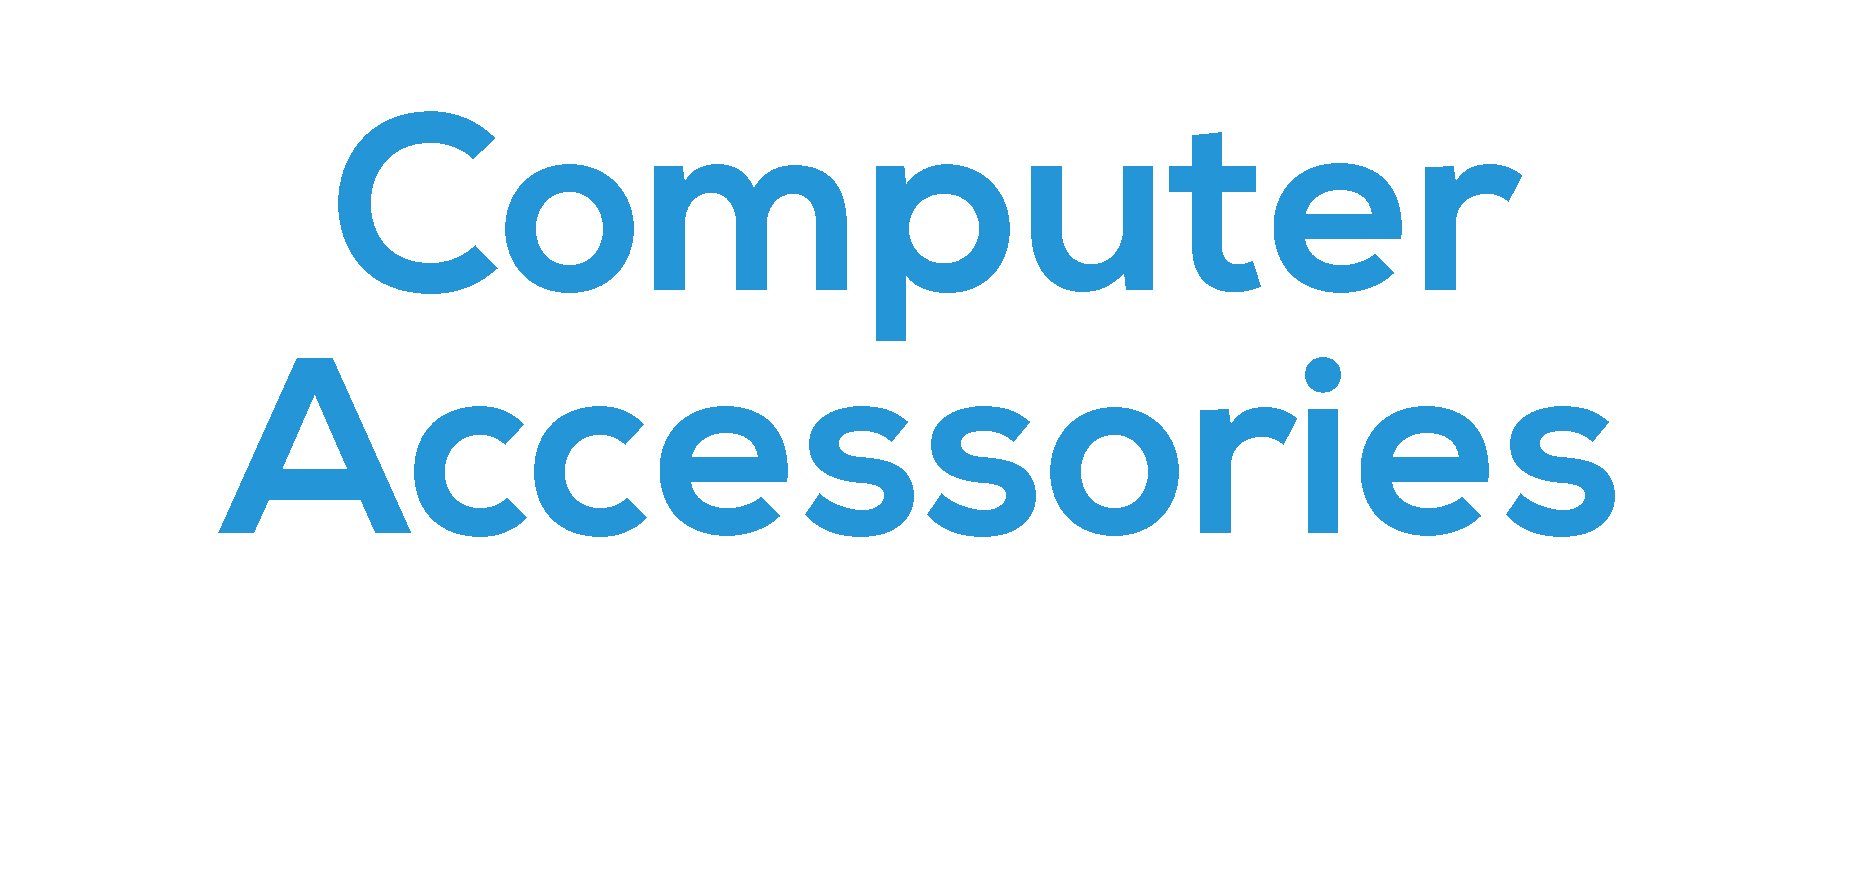 Computer Accessories